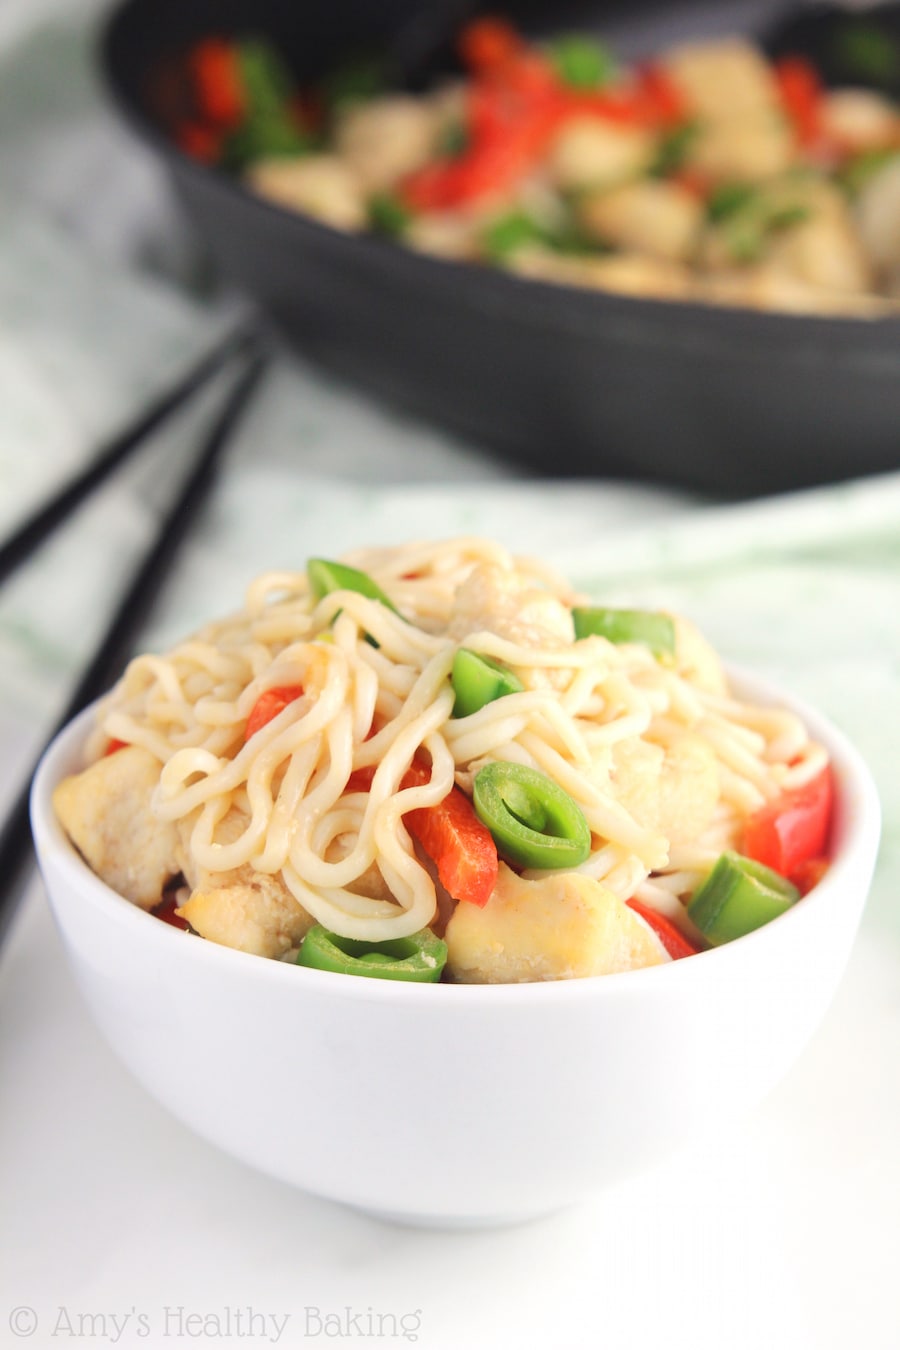 21 outstanding Shirataki Noodle Recipes to Enjoy This Zero-Calorie No-Carb Pasta from Japan! #glutenfree #paleo #keto #lowcarb | cookingtheglobe.com